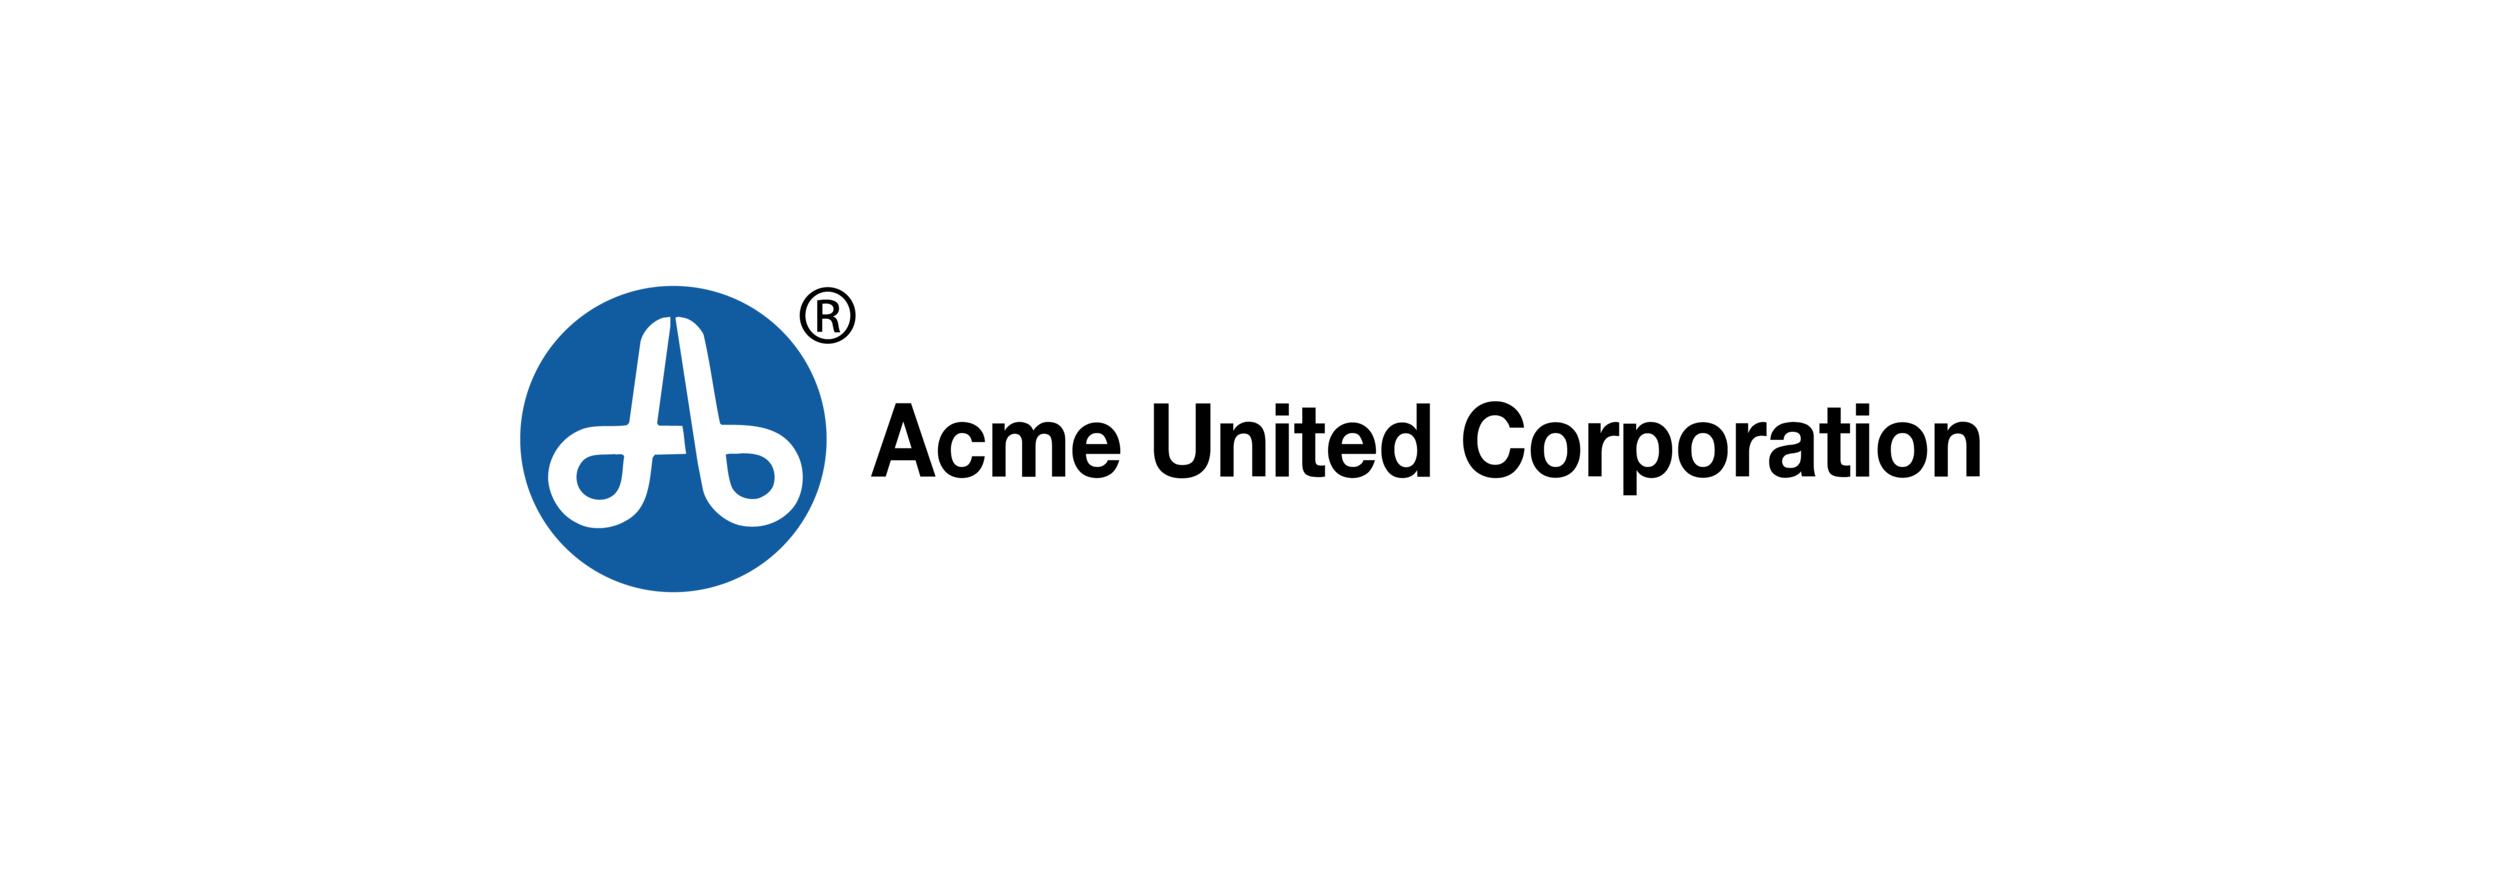 Unite reporting. APPLOVIN Corp лого. Acme Corporation. DELPHI Corporation лого. Логотип сильвамо Корпорейшн.